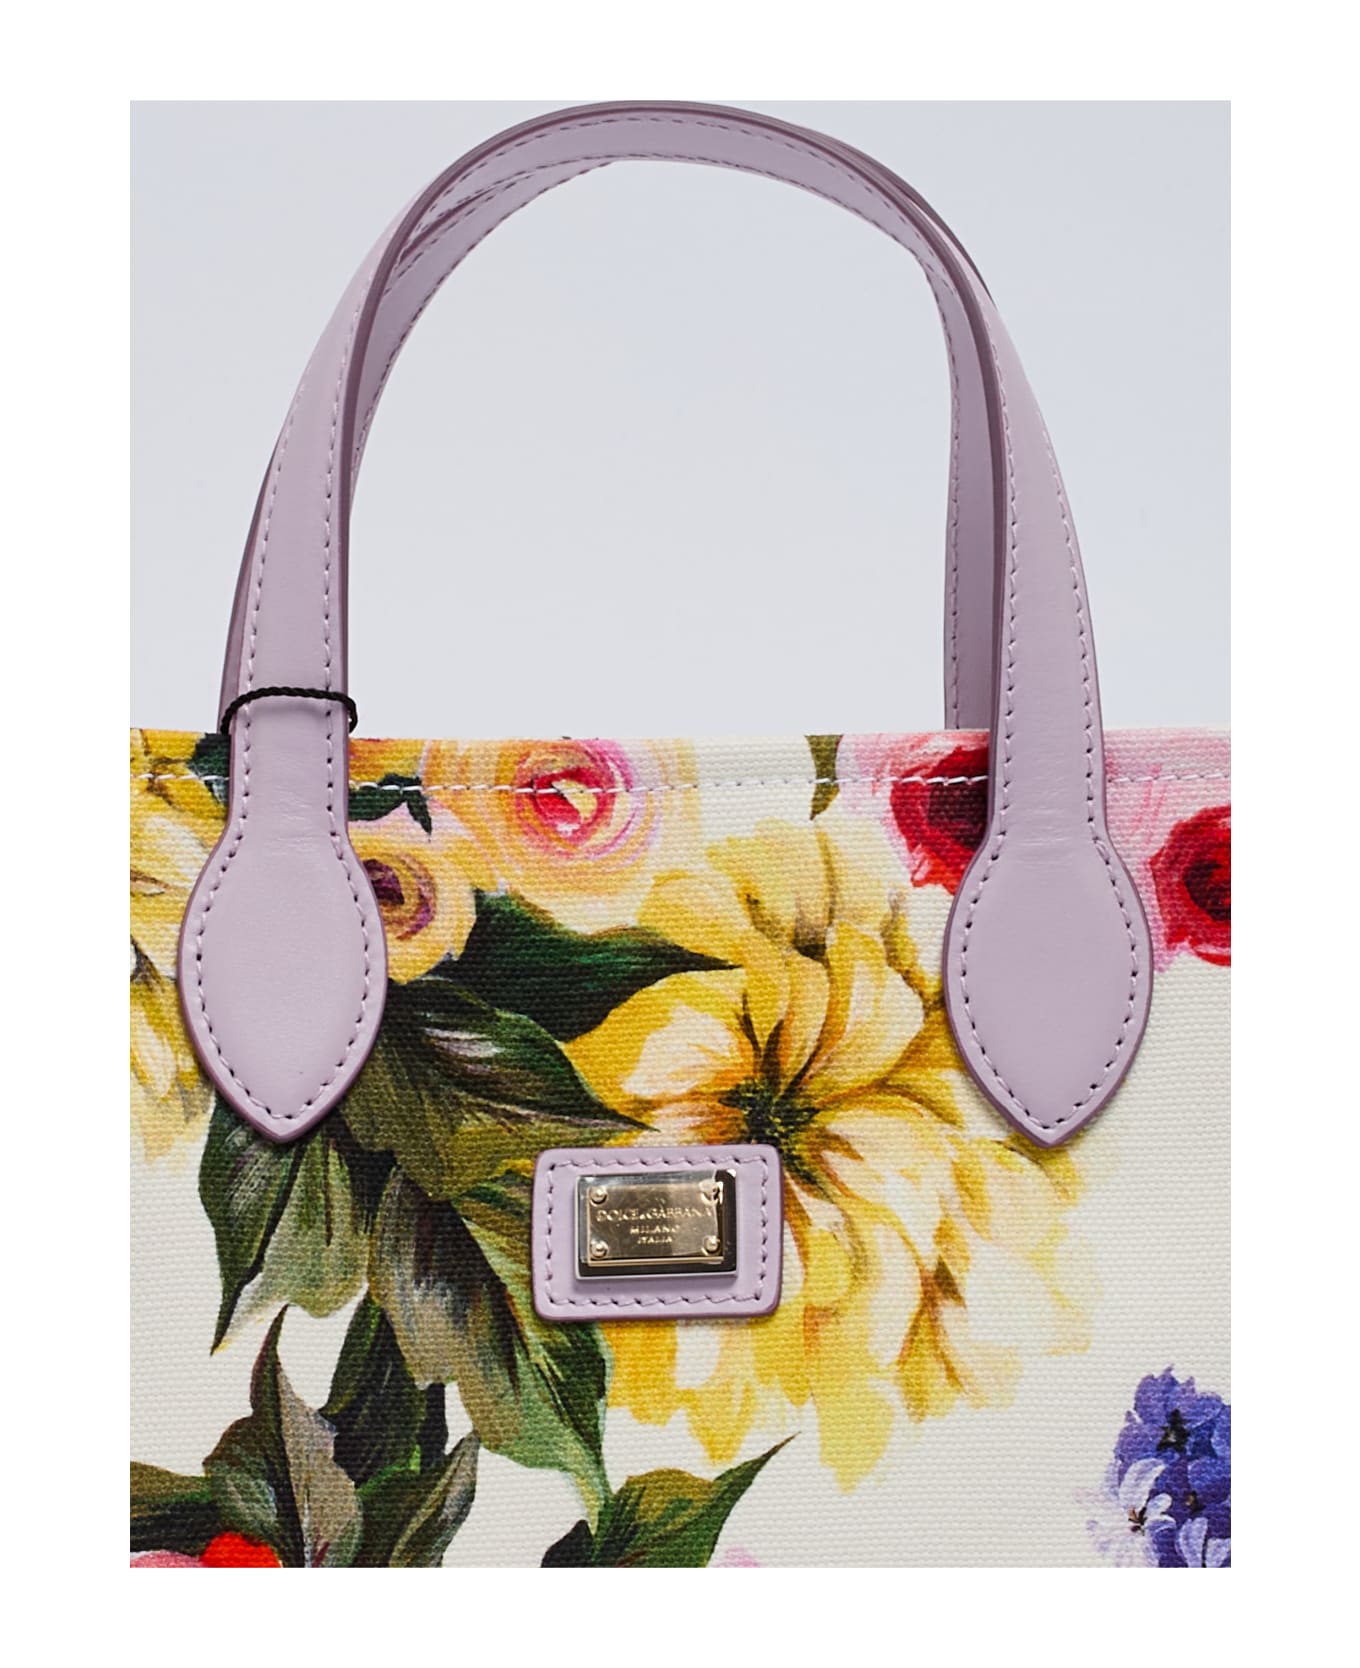 Dolce & Gabbana Handbag Shopping Bag - B.CO-FLOREALE